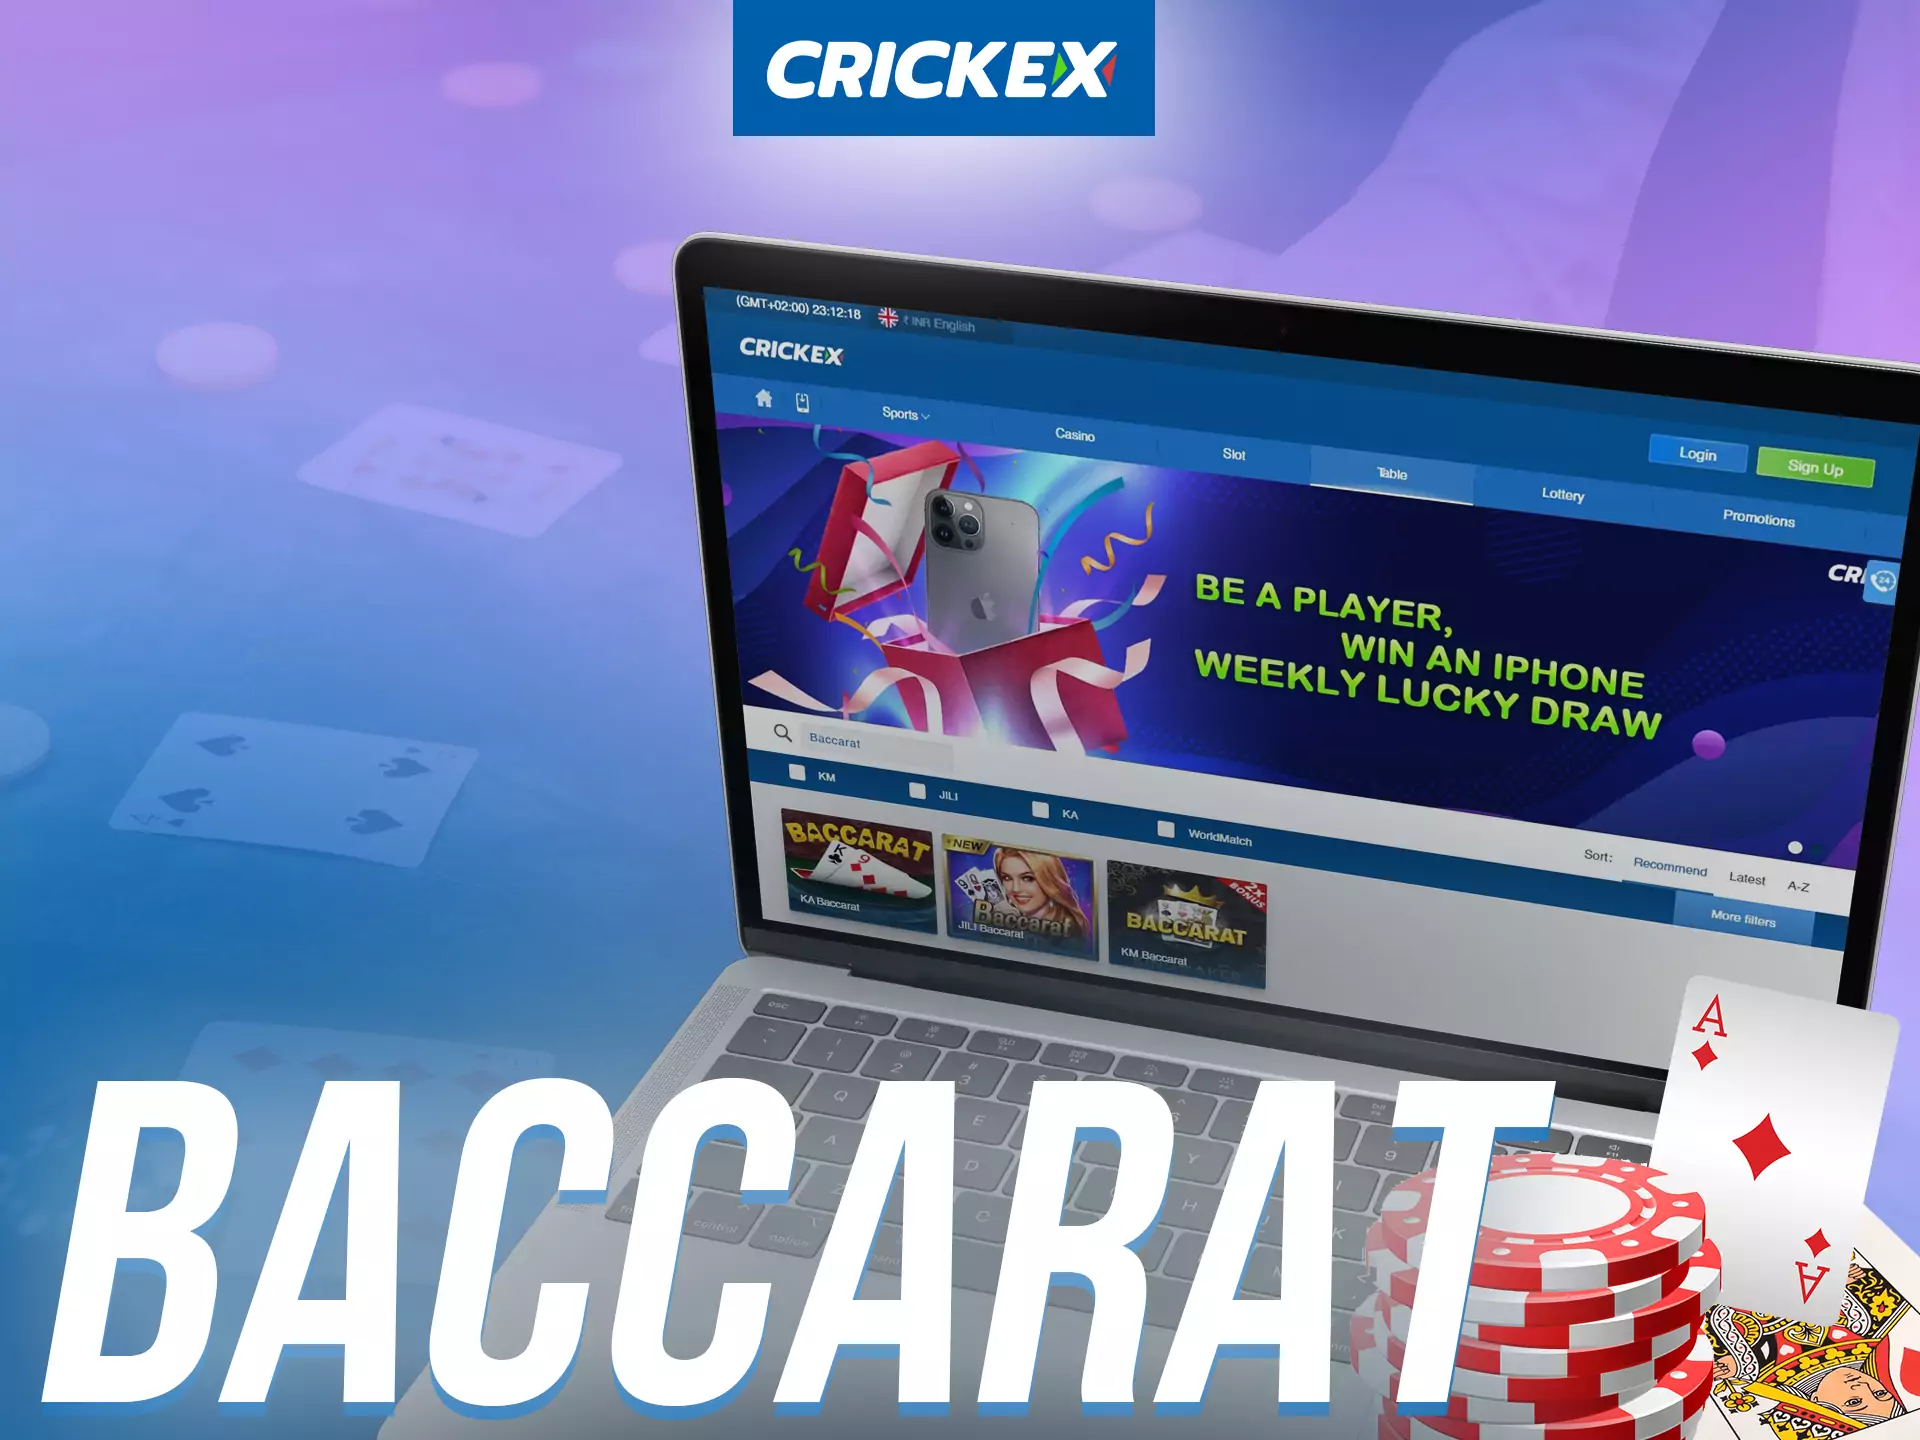 Play baccarat on Crickex.